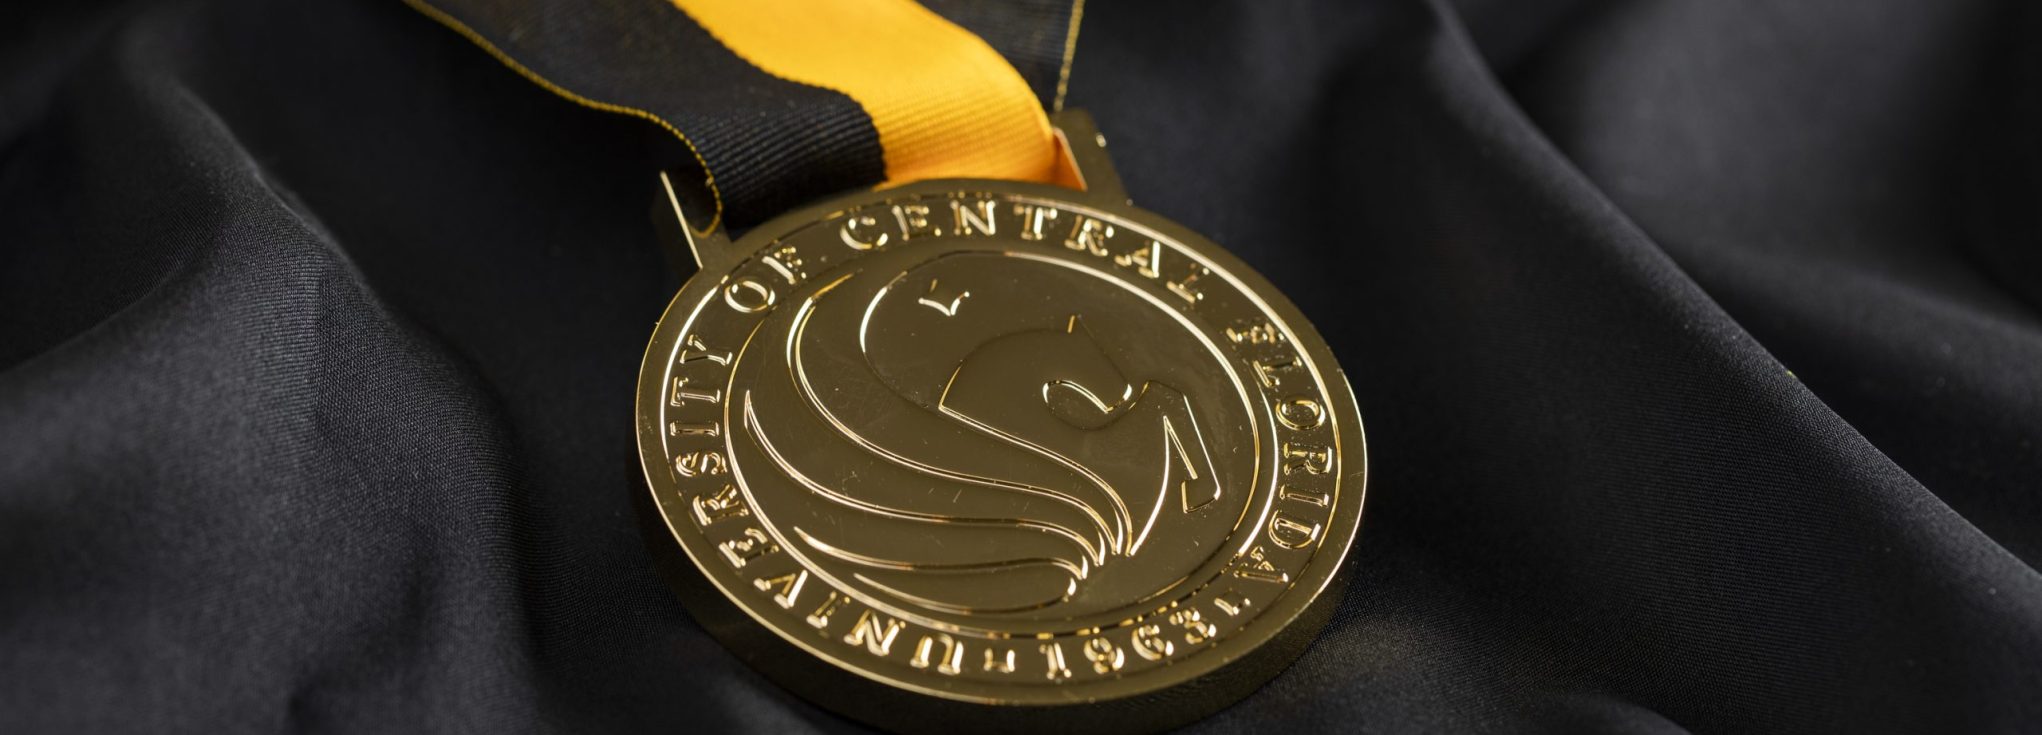 UCF-medal-scaled.jpg